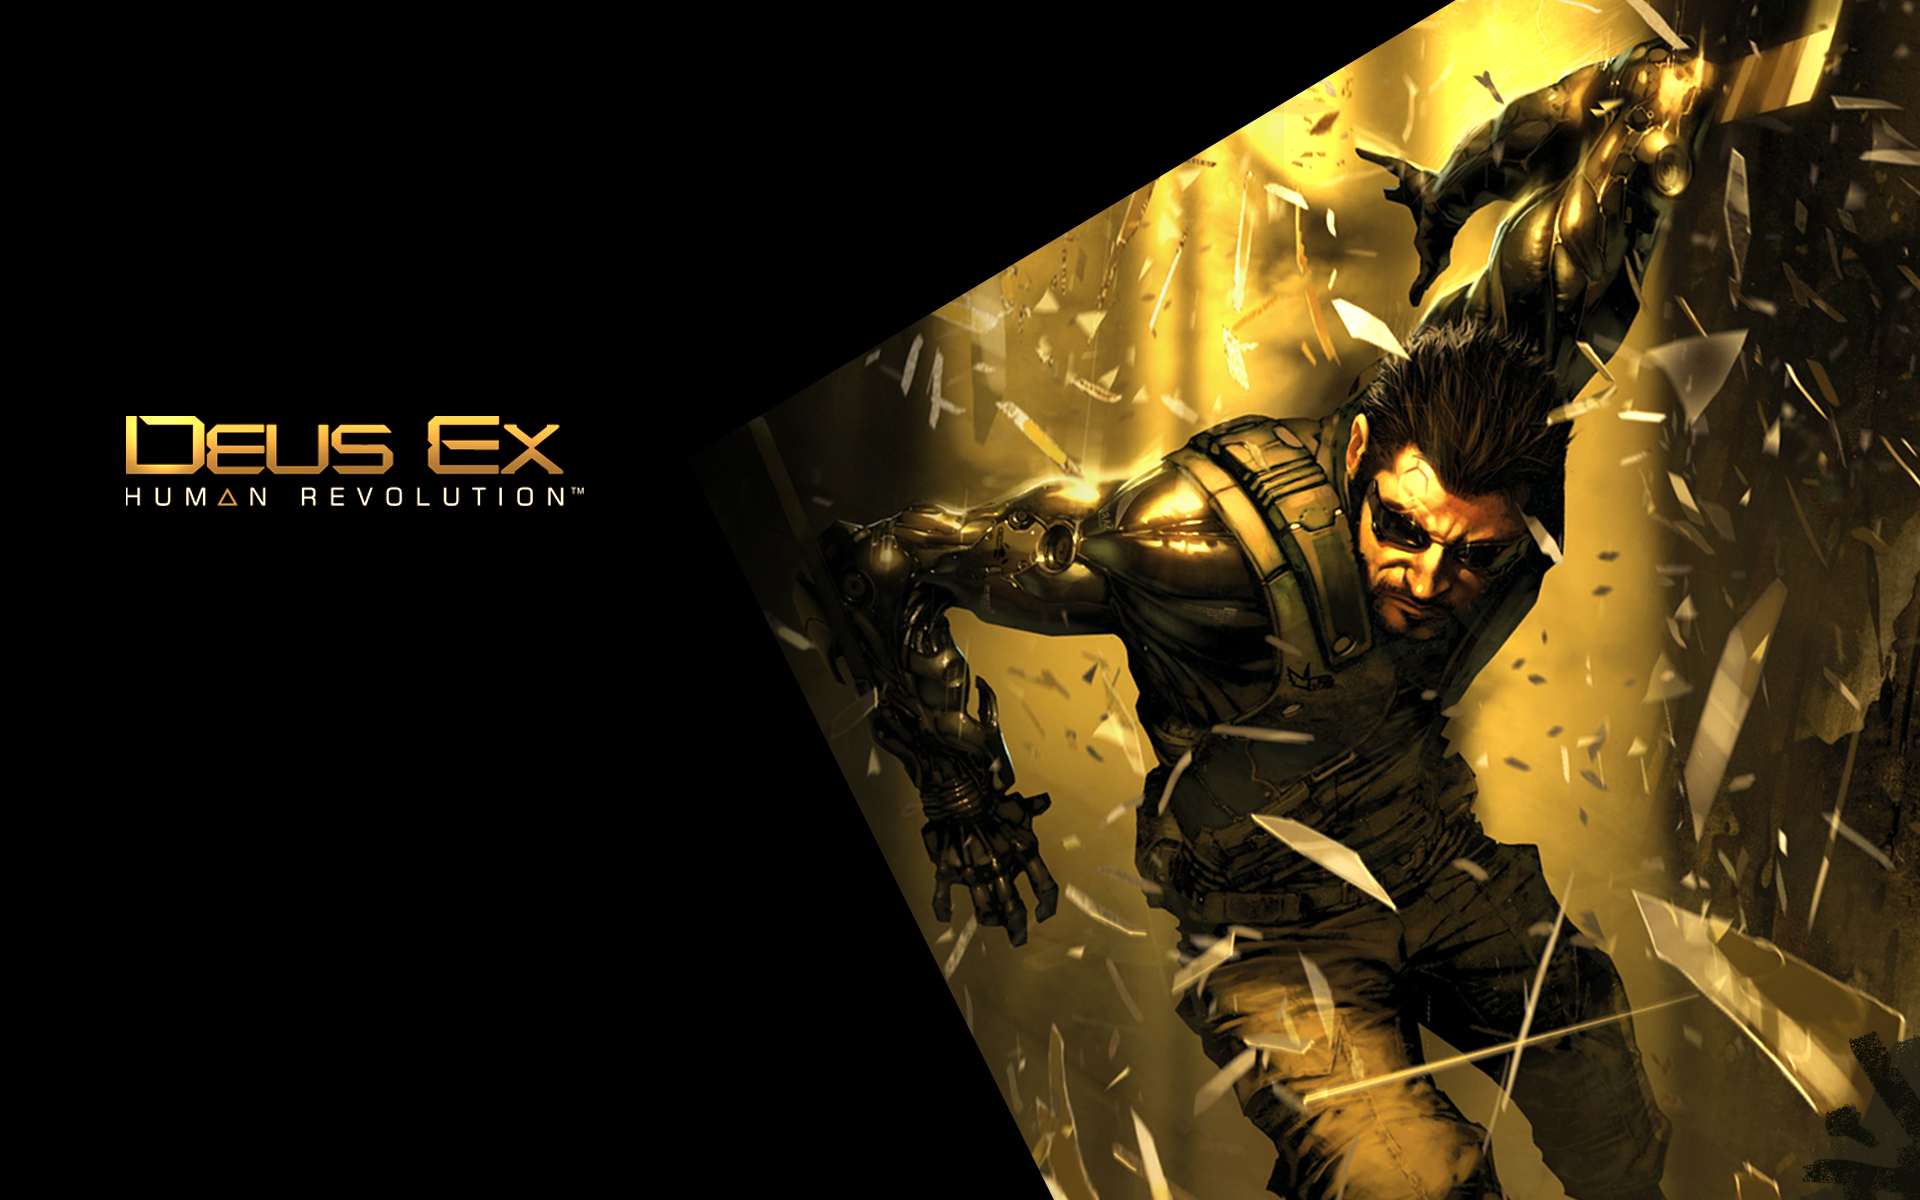 Deus Ex Human Revolution Wallpapers   HQ Wallpapers   HQ Wallpapers